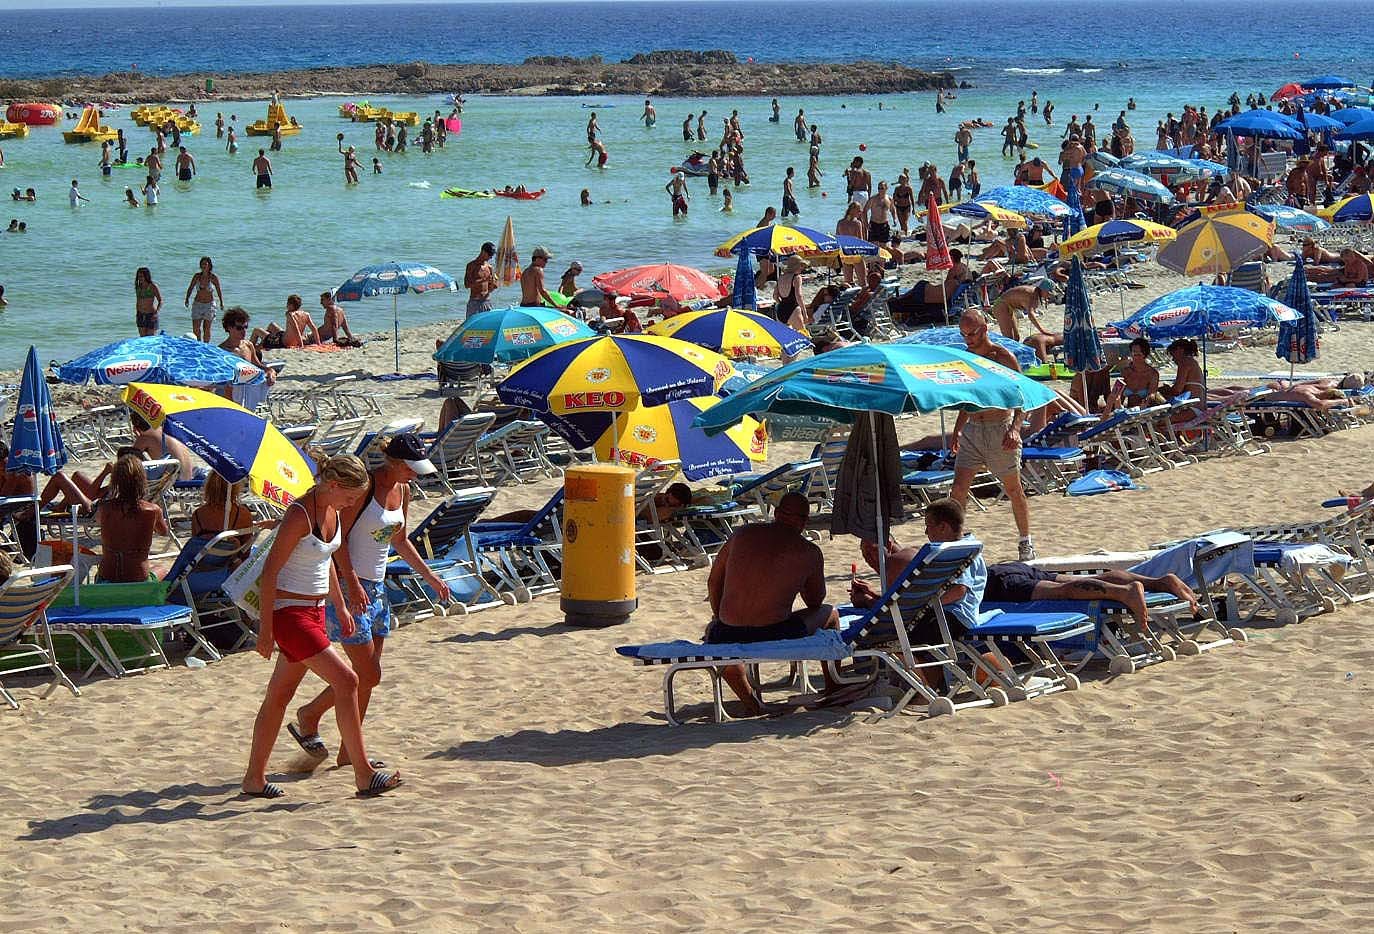 Tρία περιστατικά θερμοπληξίας λόγω του καύσωνα στην Κύπρο